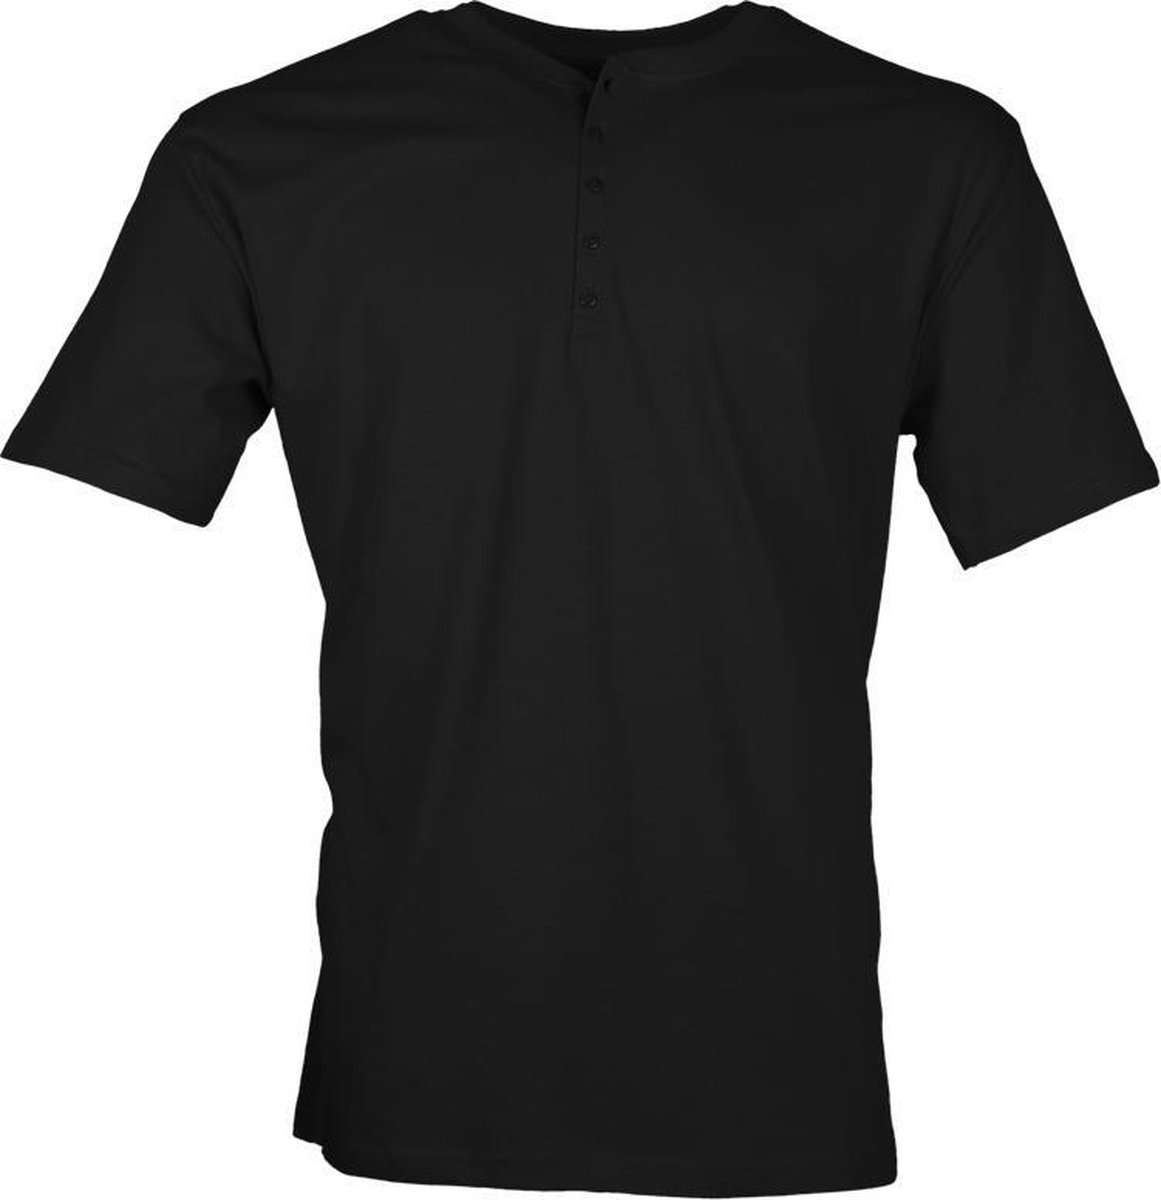 Losan Basic - Heren T-Shirt - Korte Mouw - Ronde Hals - Knoopjes - Zwart - Maat M